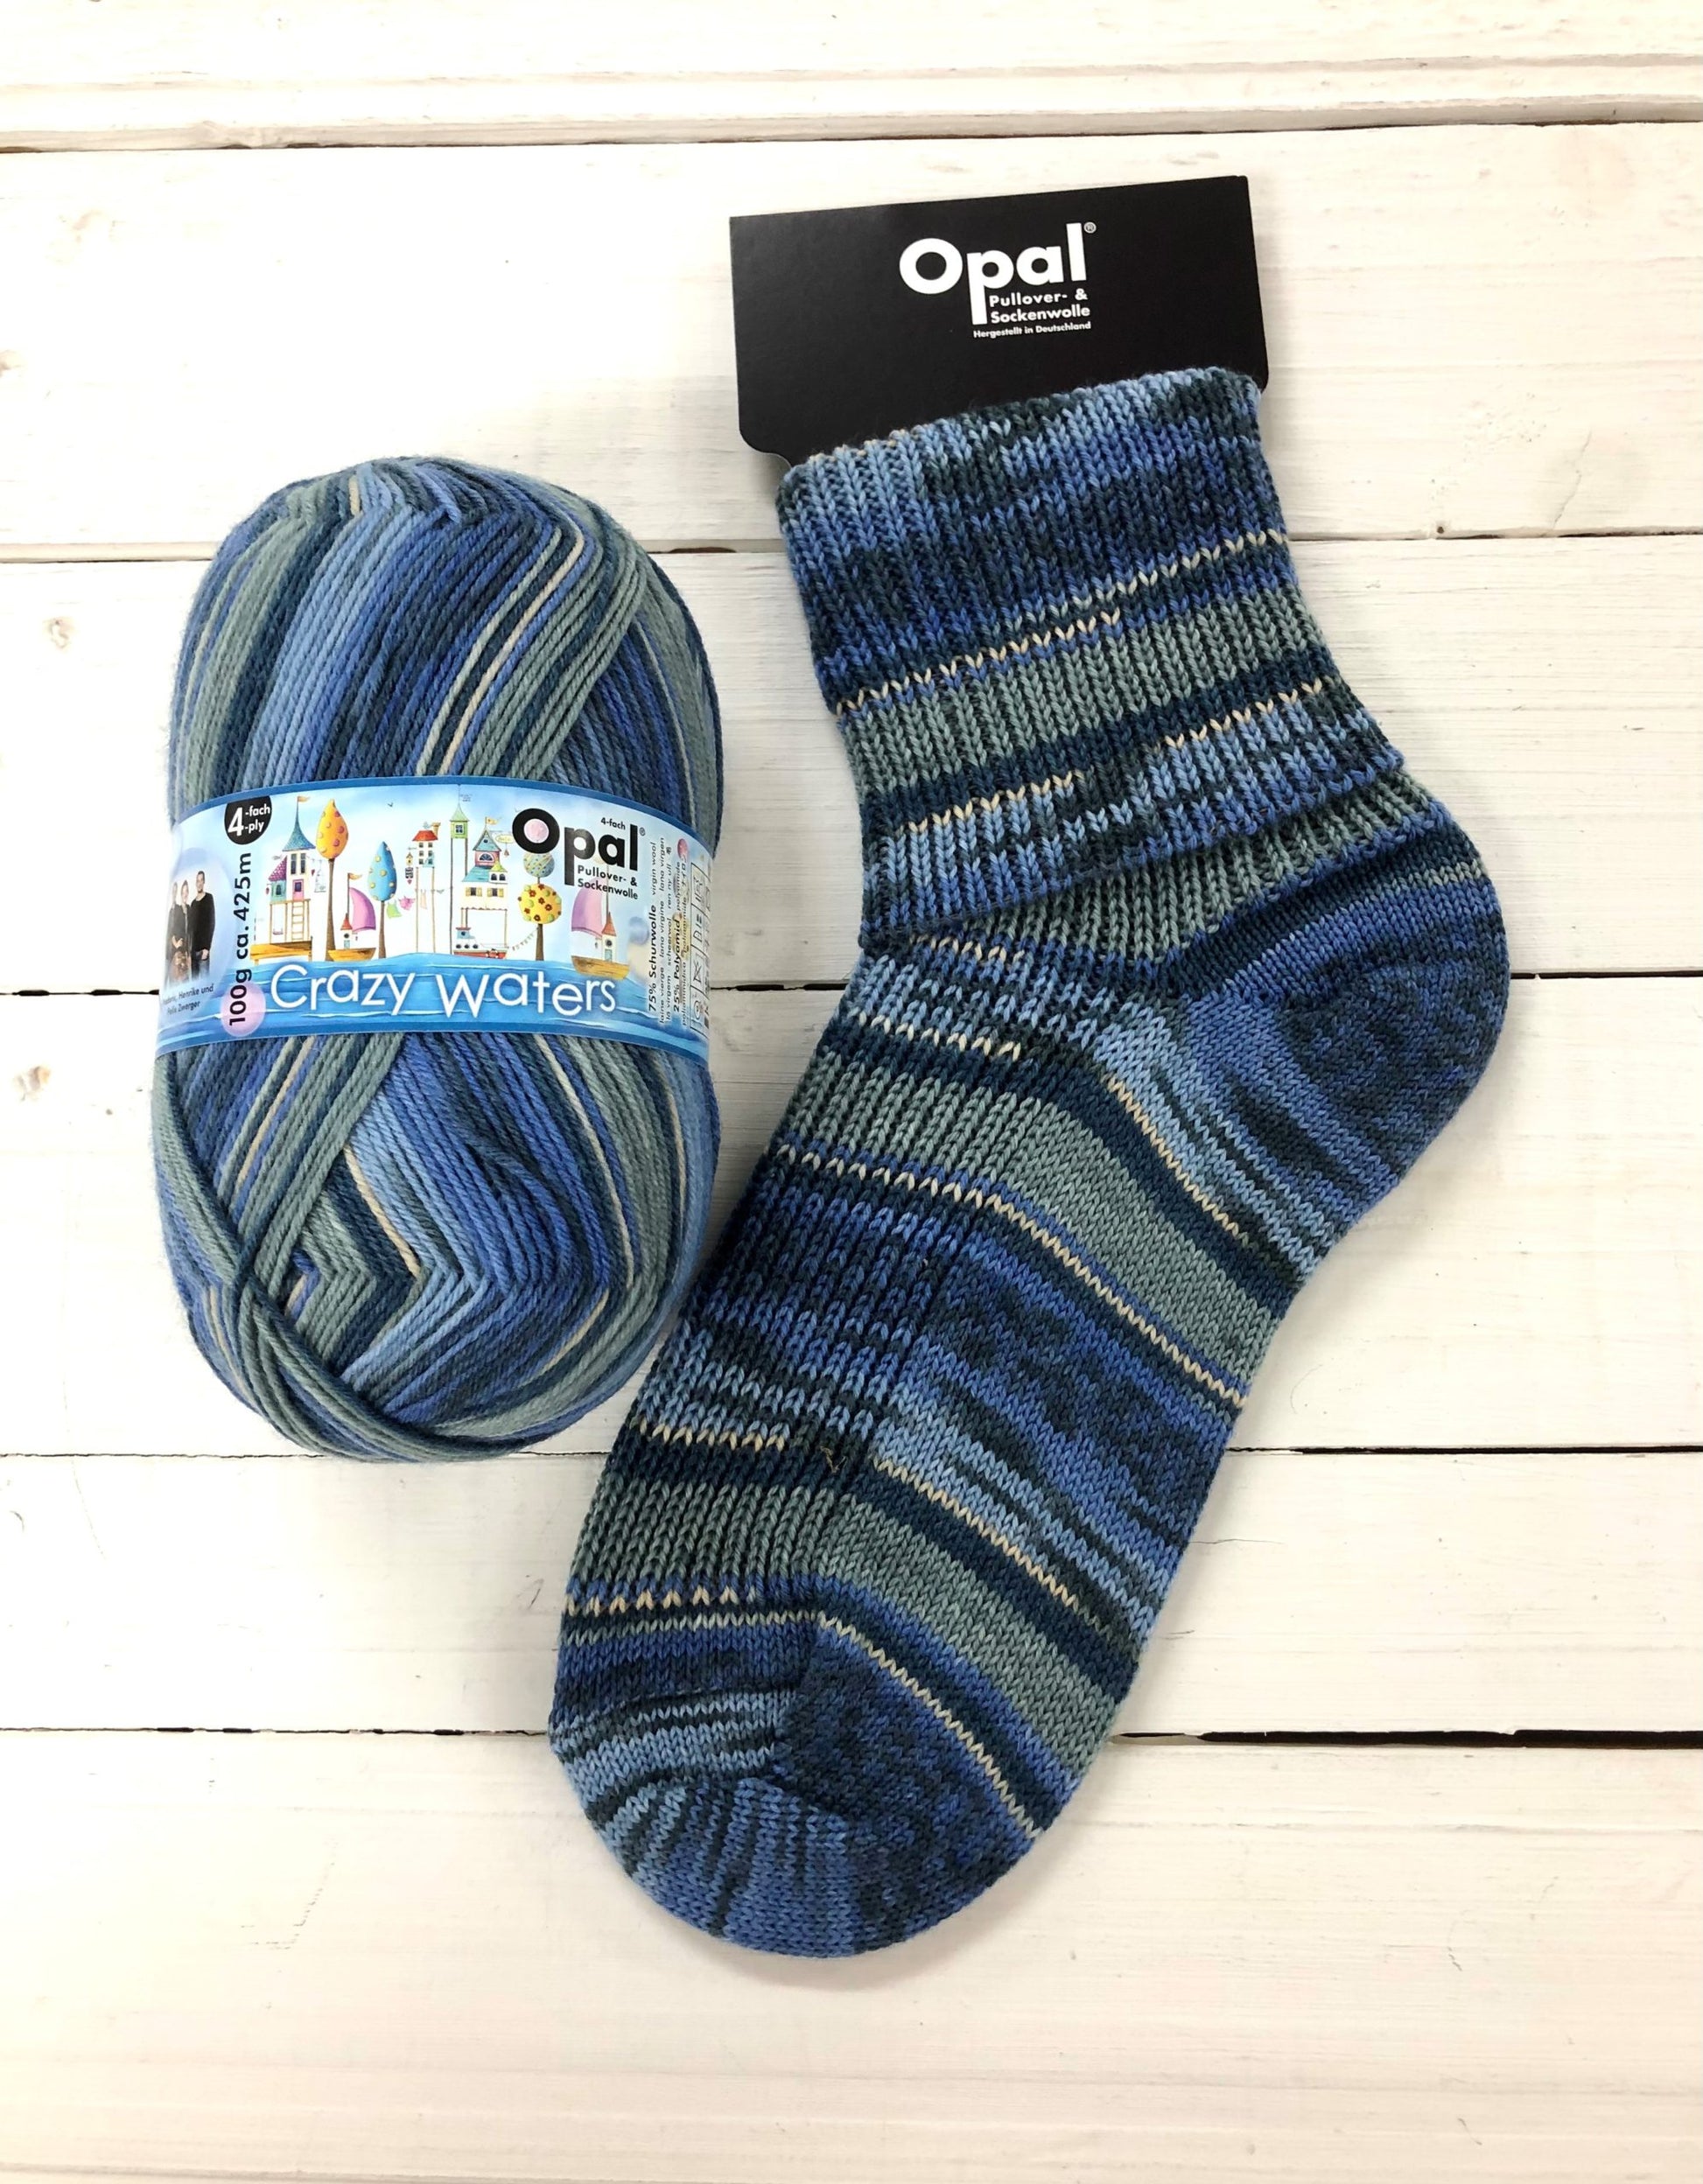 11314 - Shades of blue and grey self striping sock. 